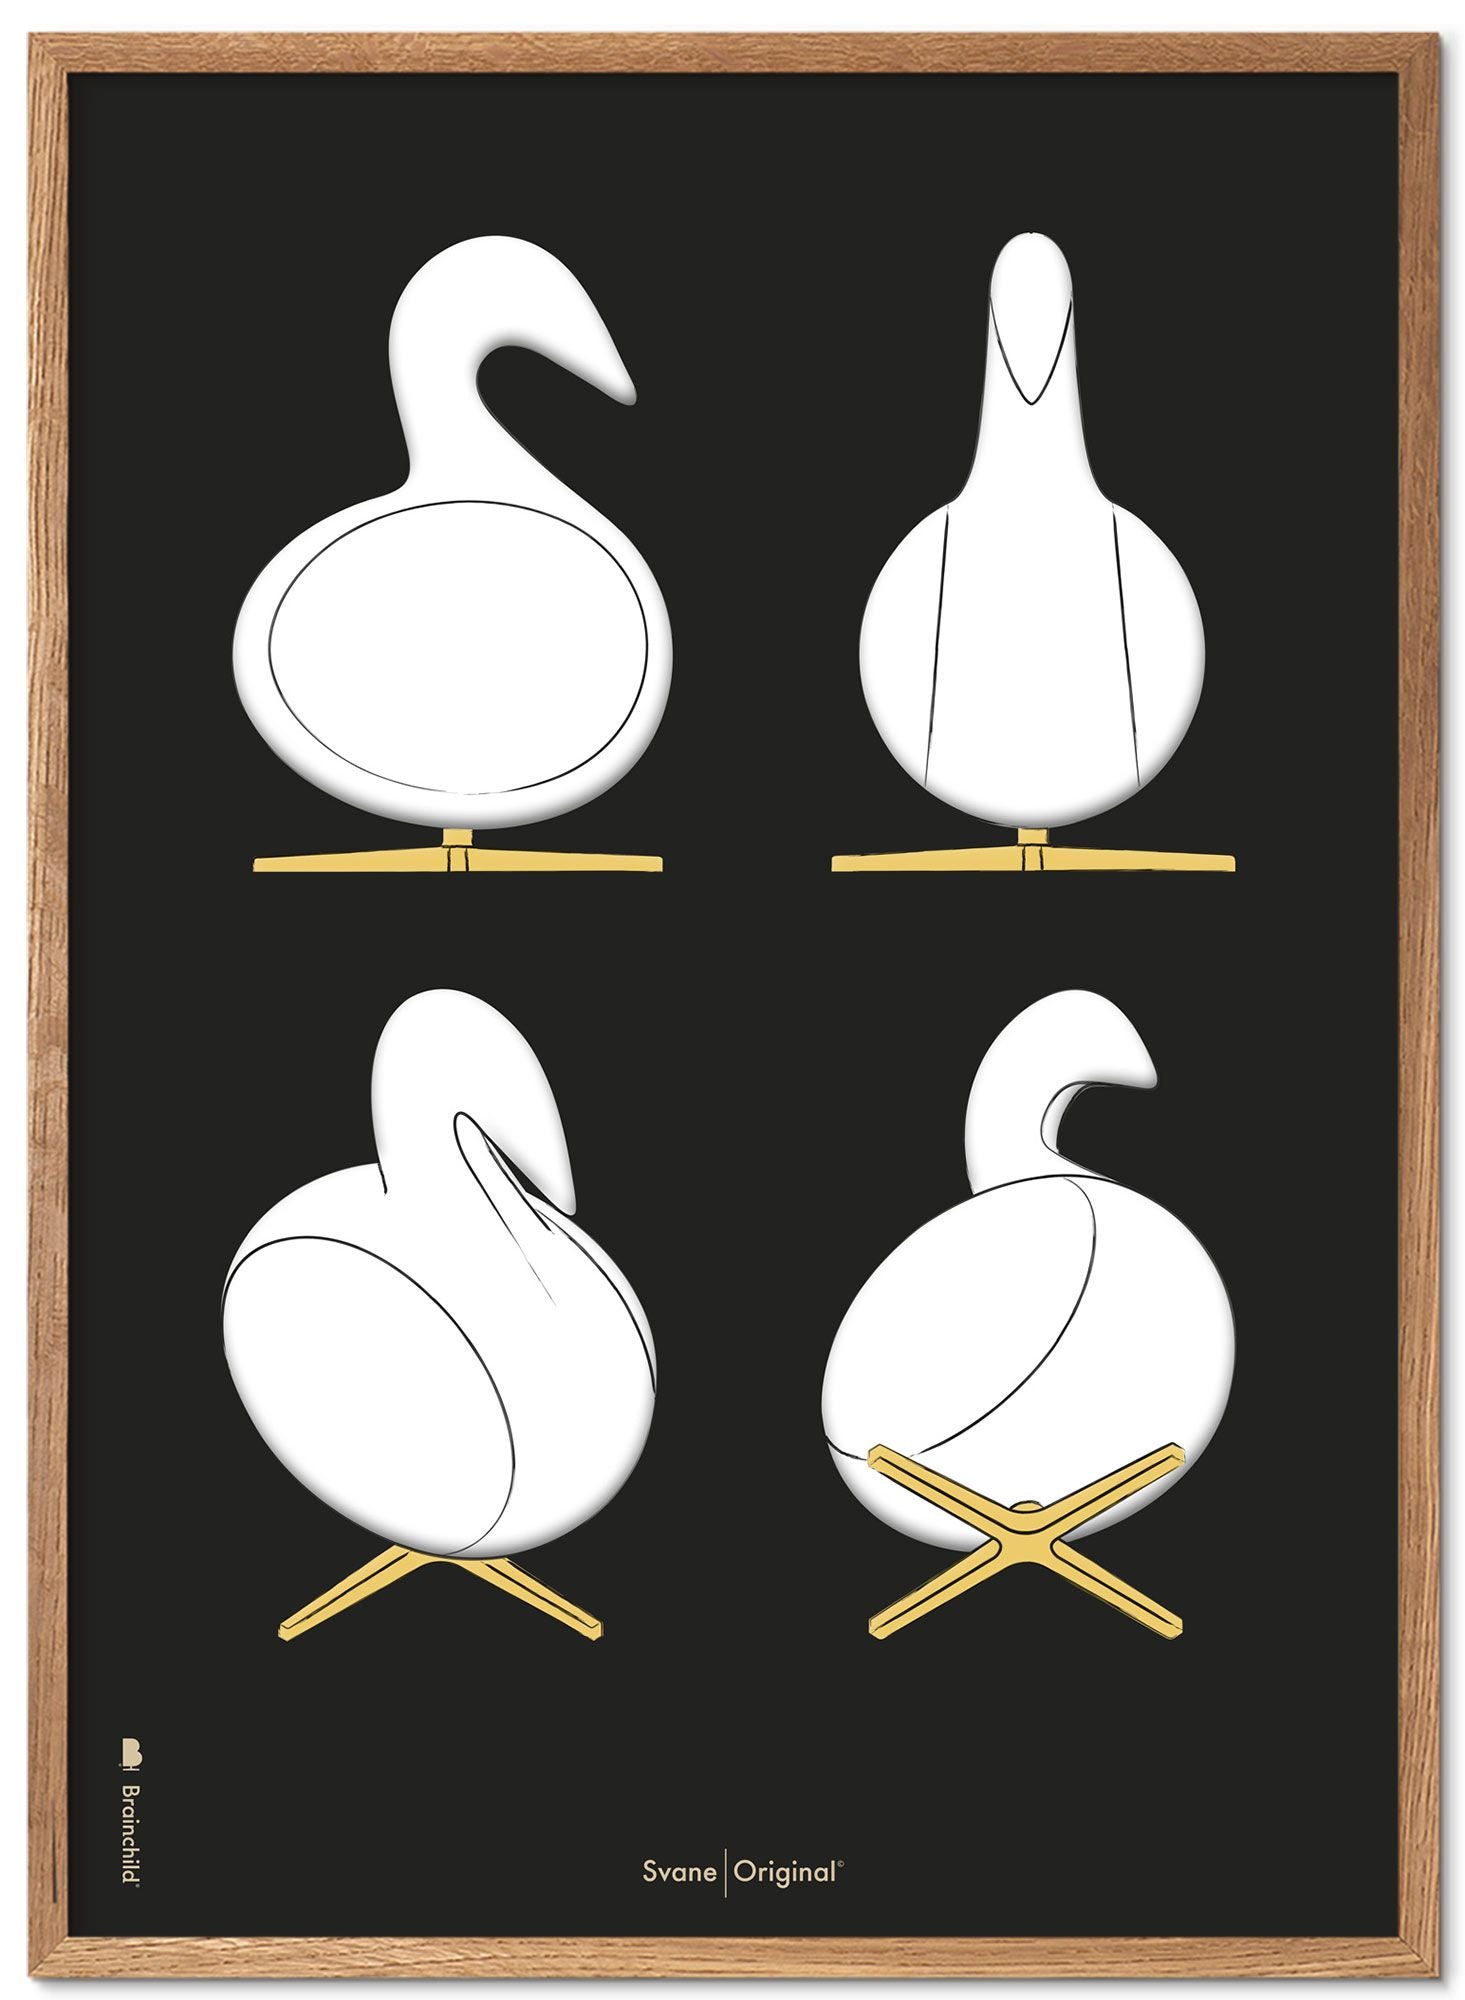 Brainchild Swan Design Sketches Affisch Frame gjord av lätt trä A5, svart bakgrund